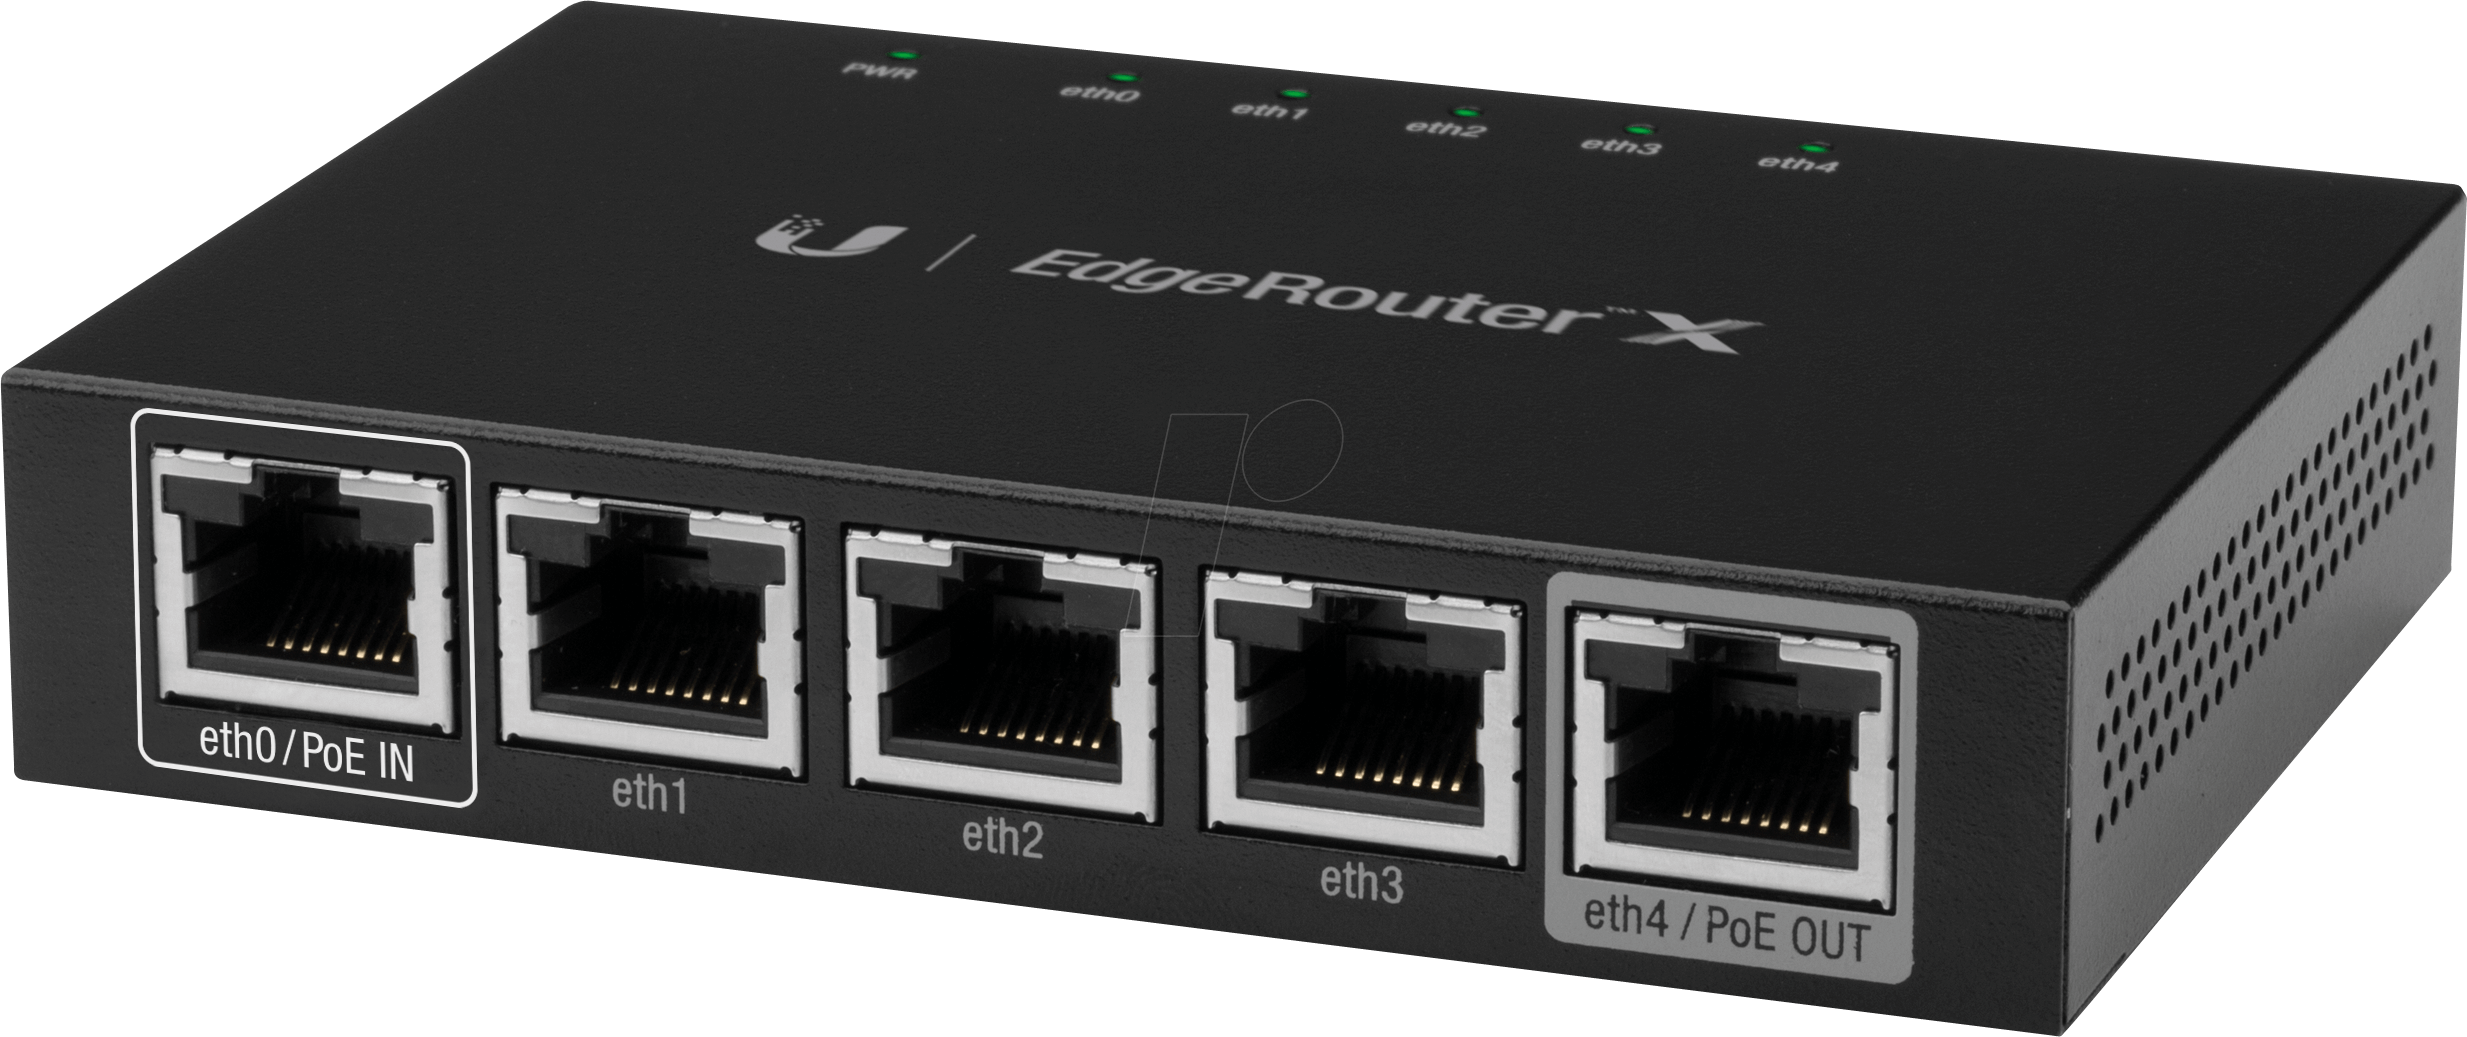 Ubiquiti EdgeRouter X - with Gigabit Ethernet